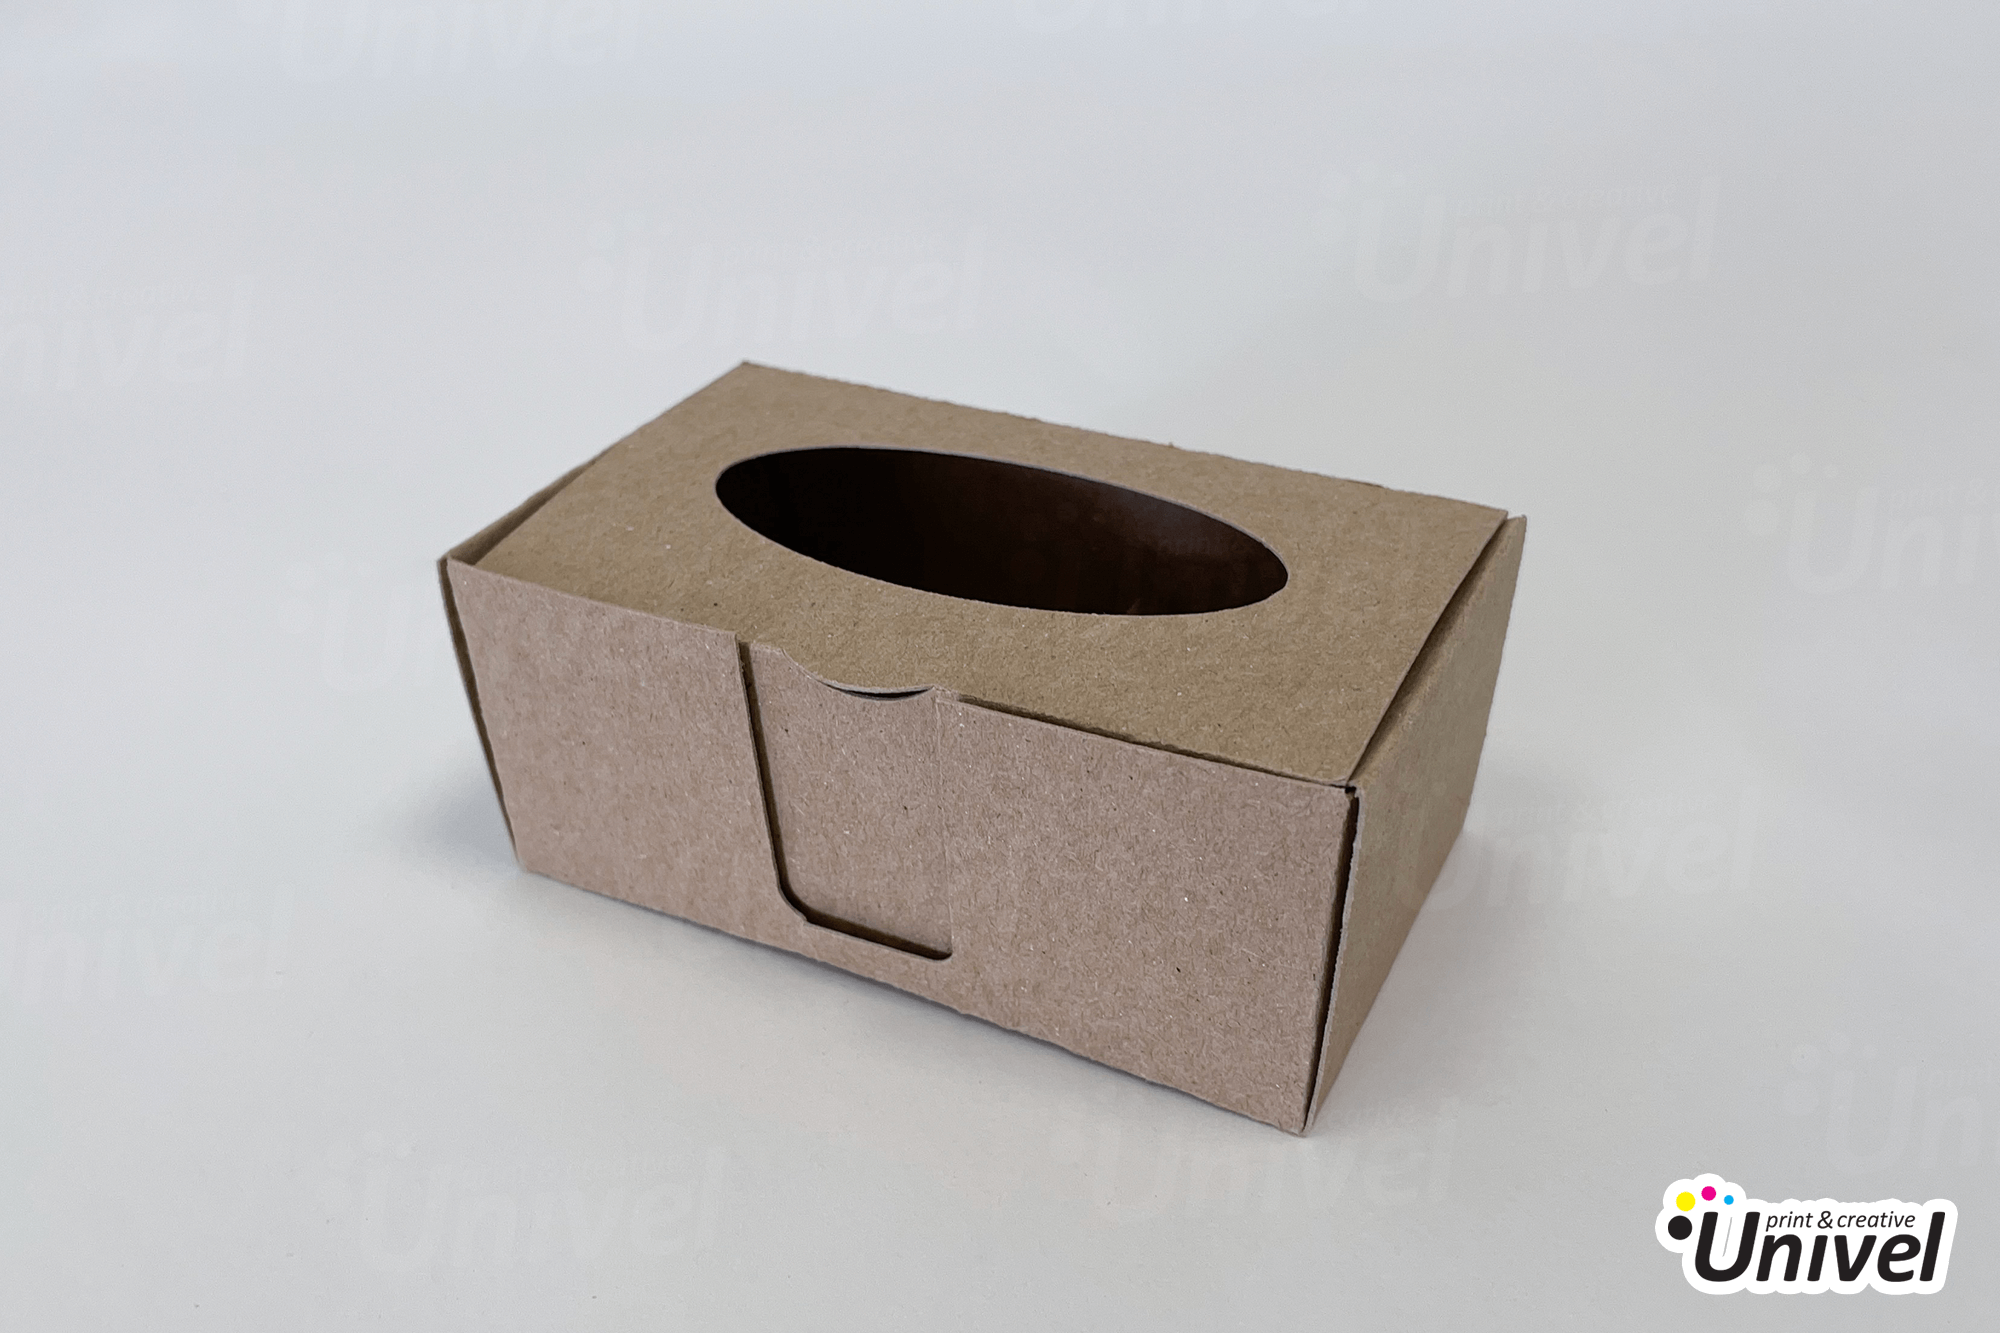 Univel 2021 - Krabice a obaly na mieru - zložená krabica na vizitky z lepenky